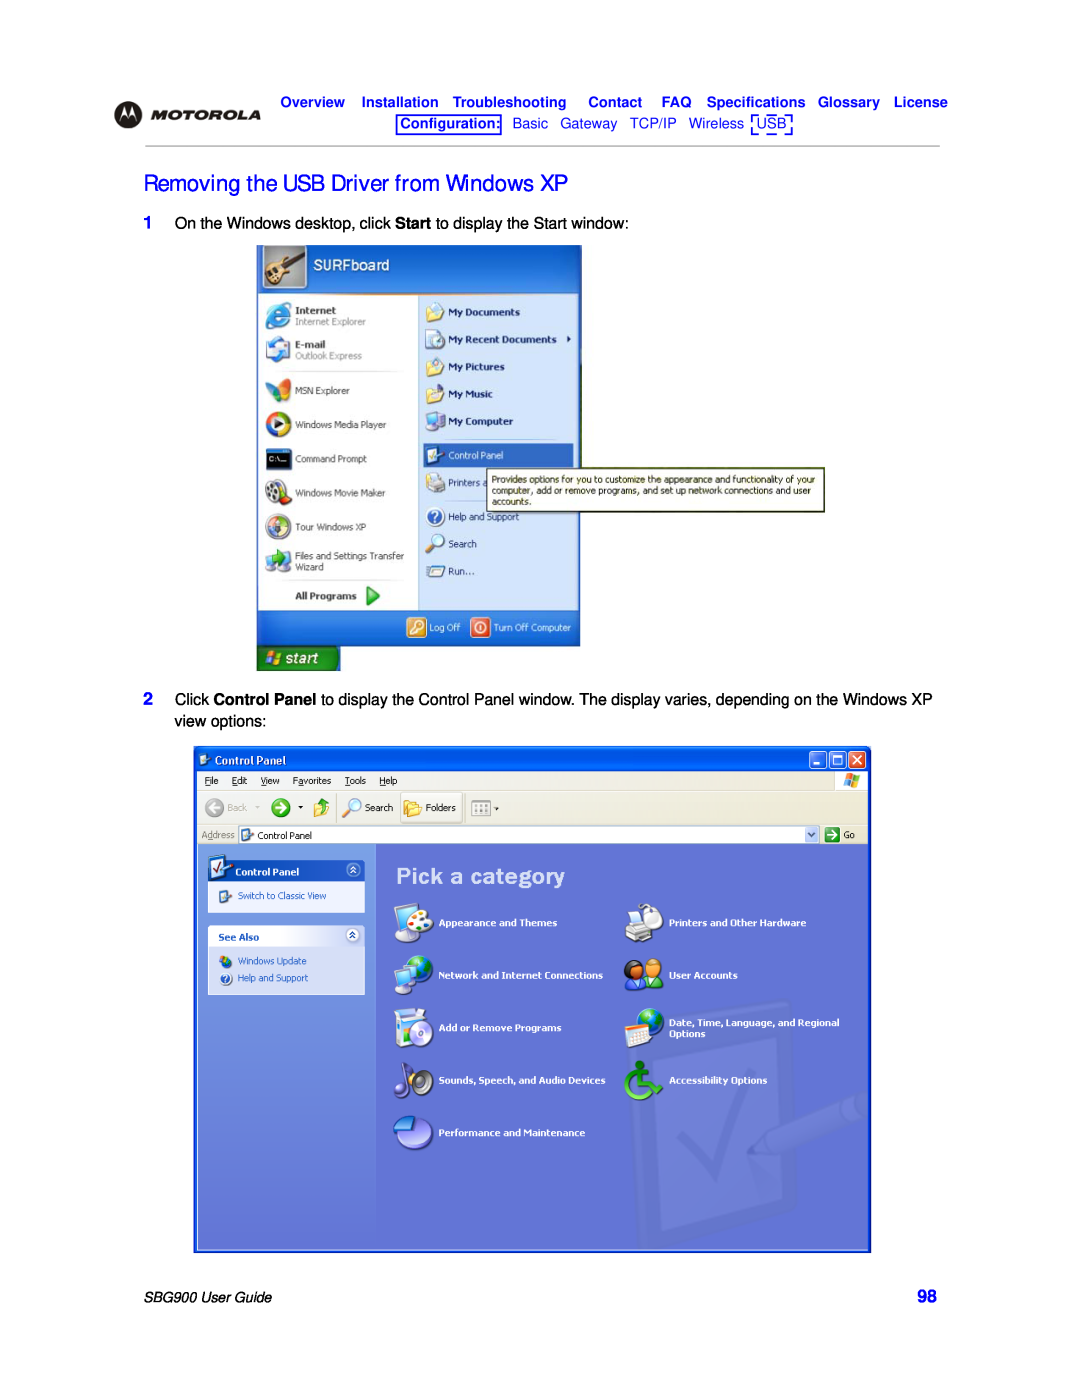 Motorola SBG900 Removing the USB Driver from Windows XP, On the Windows desktop, click Start to display the Start window 